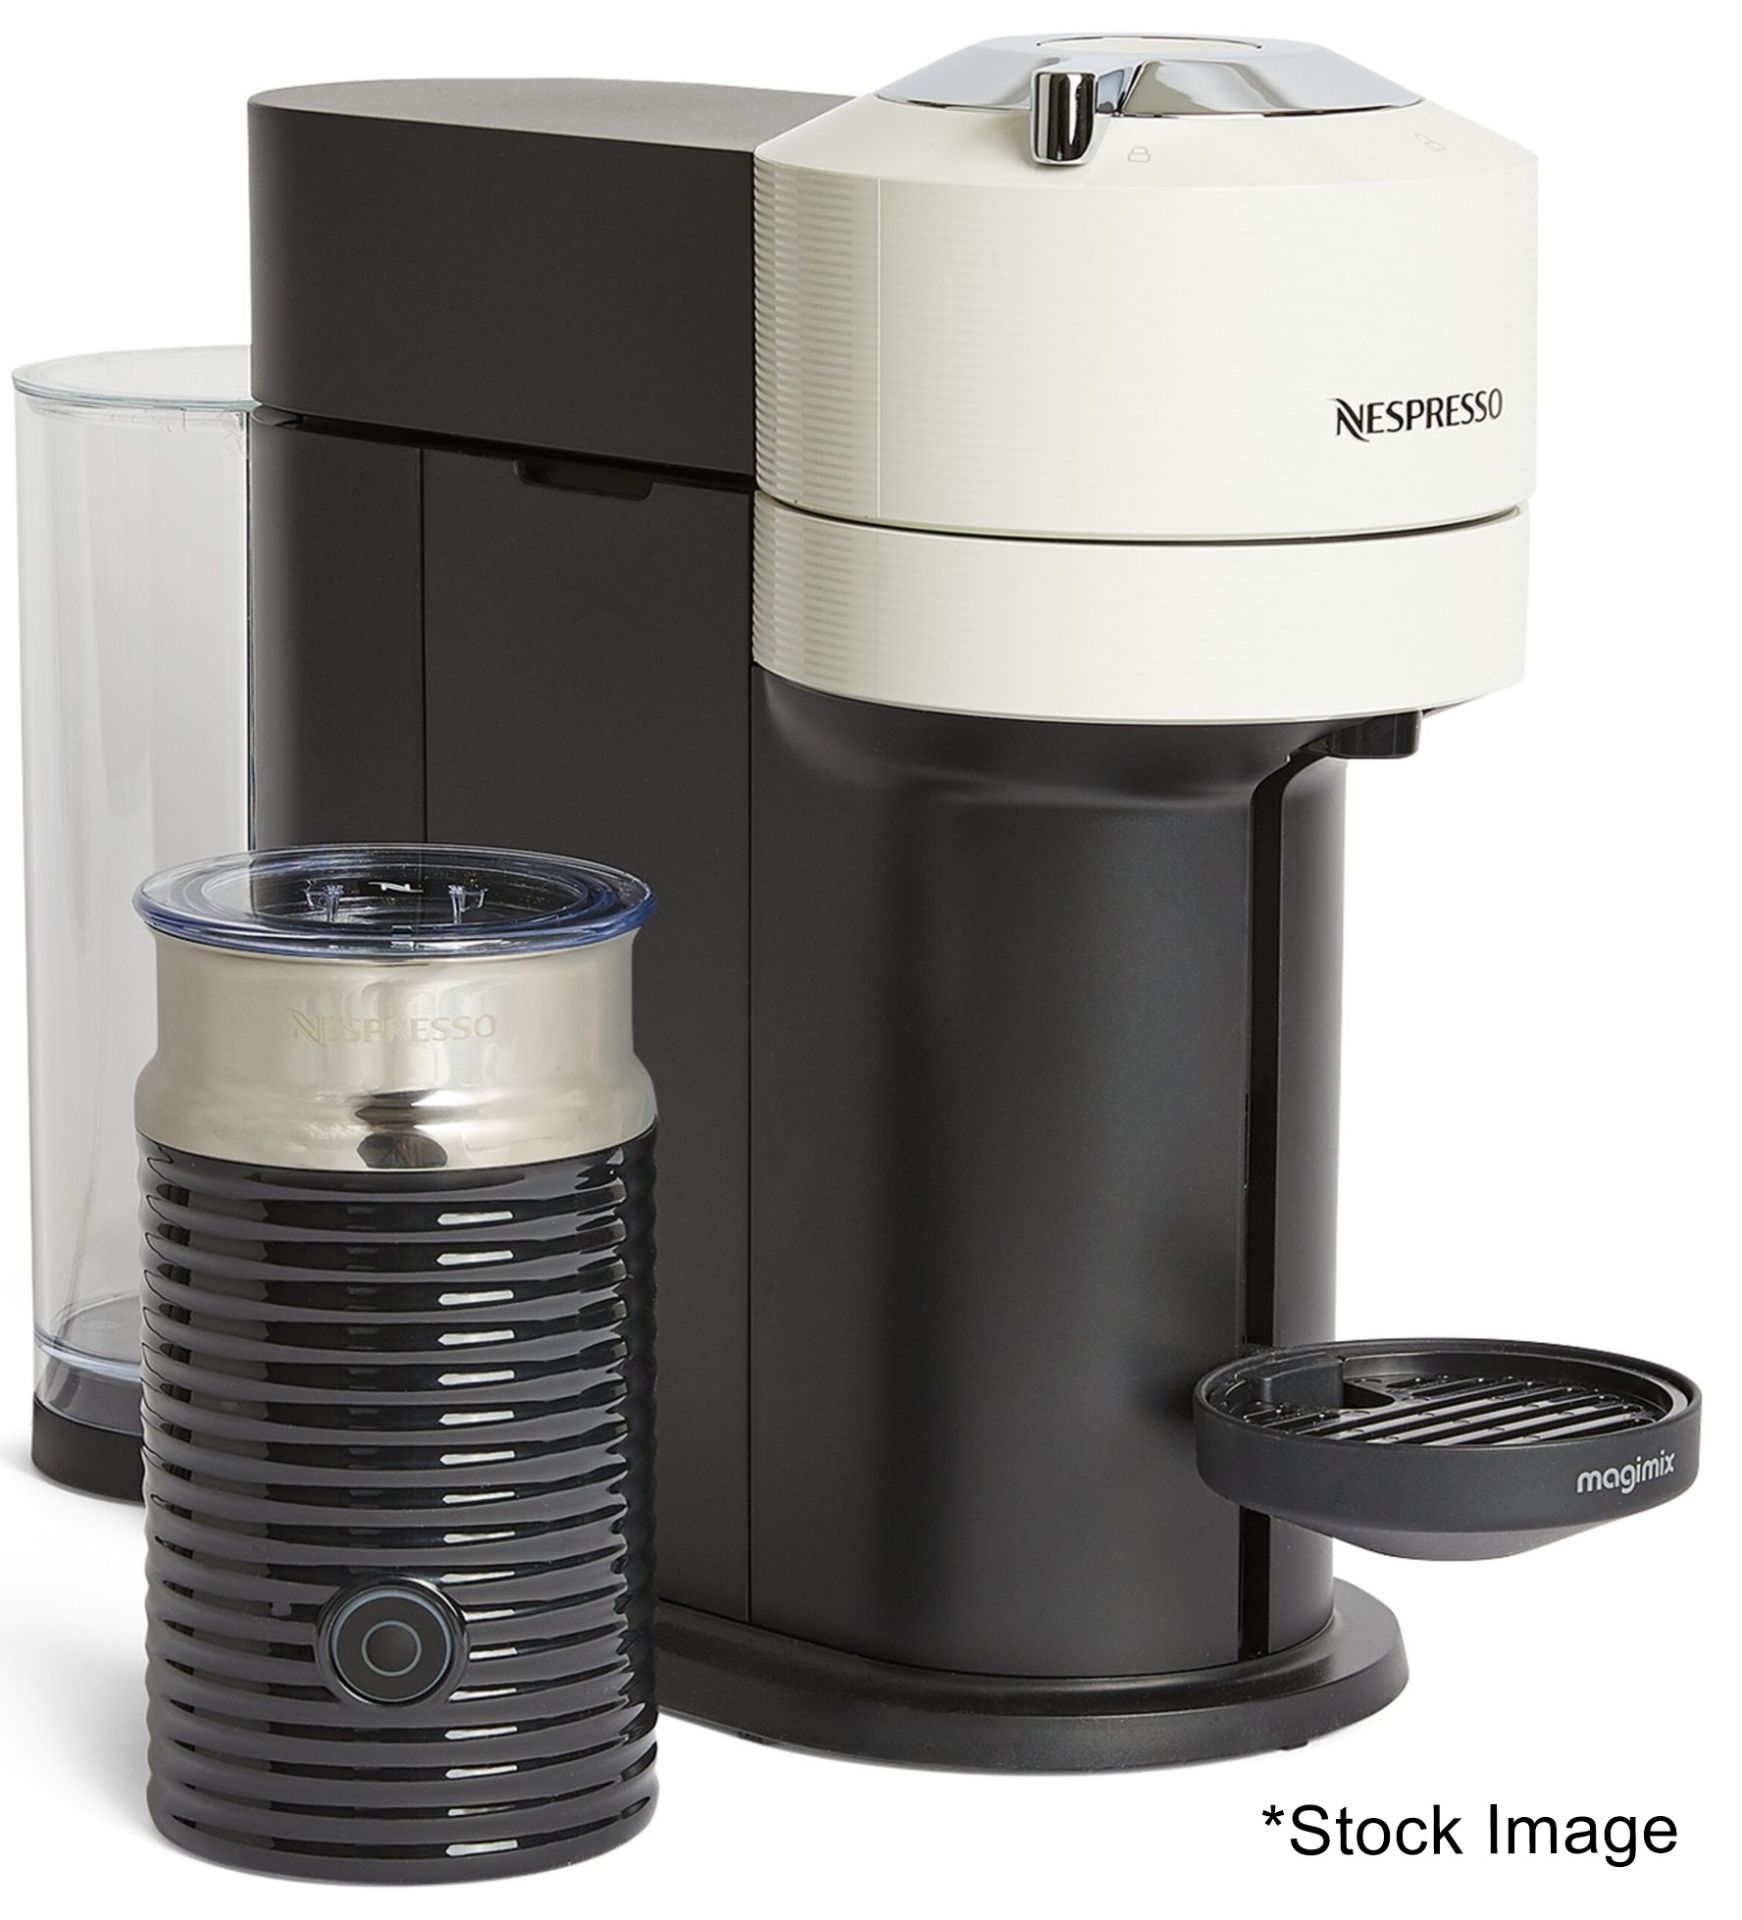 1 x NESPRESSO 'Vertou' Next Coffee Machine with Aeroccino3 Milk Frother - Original Price £200.00